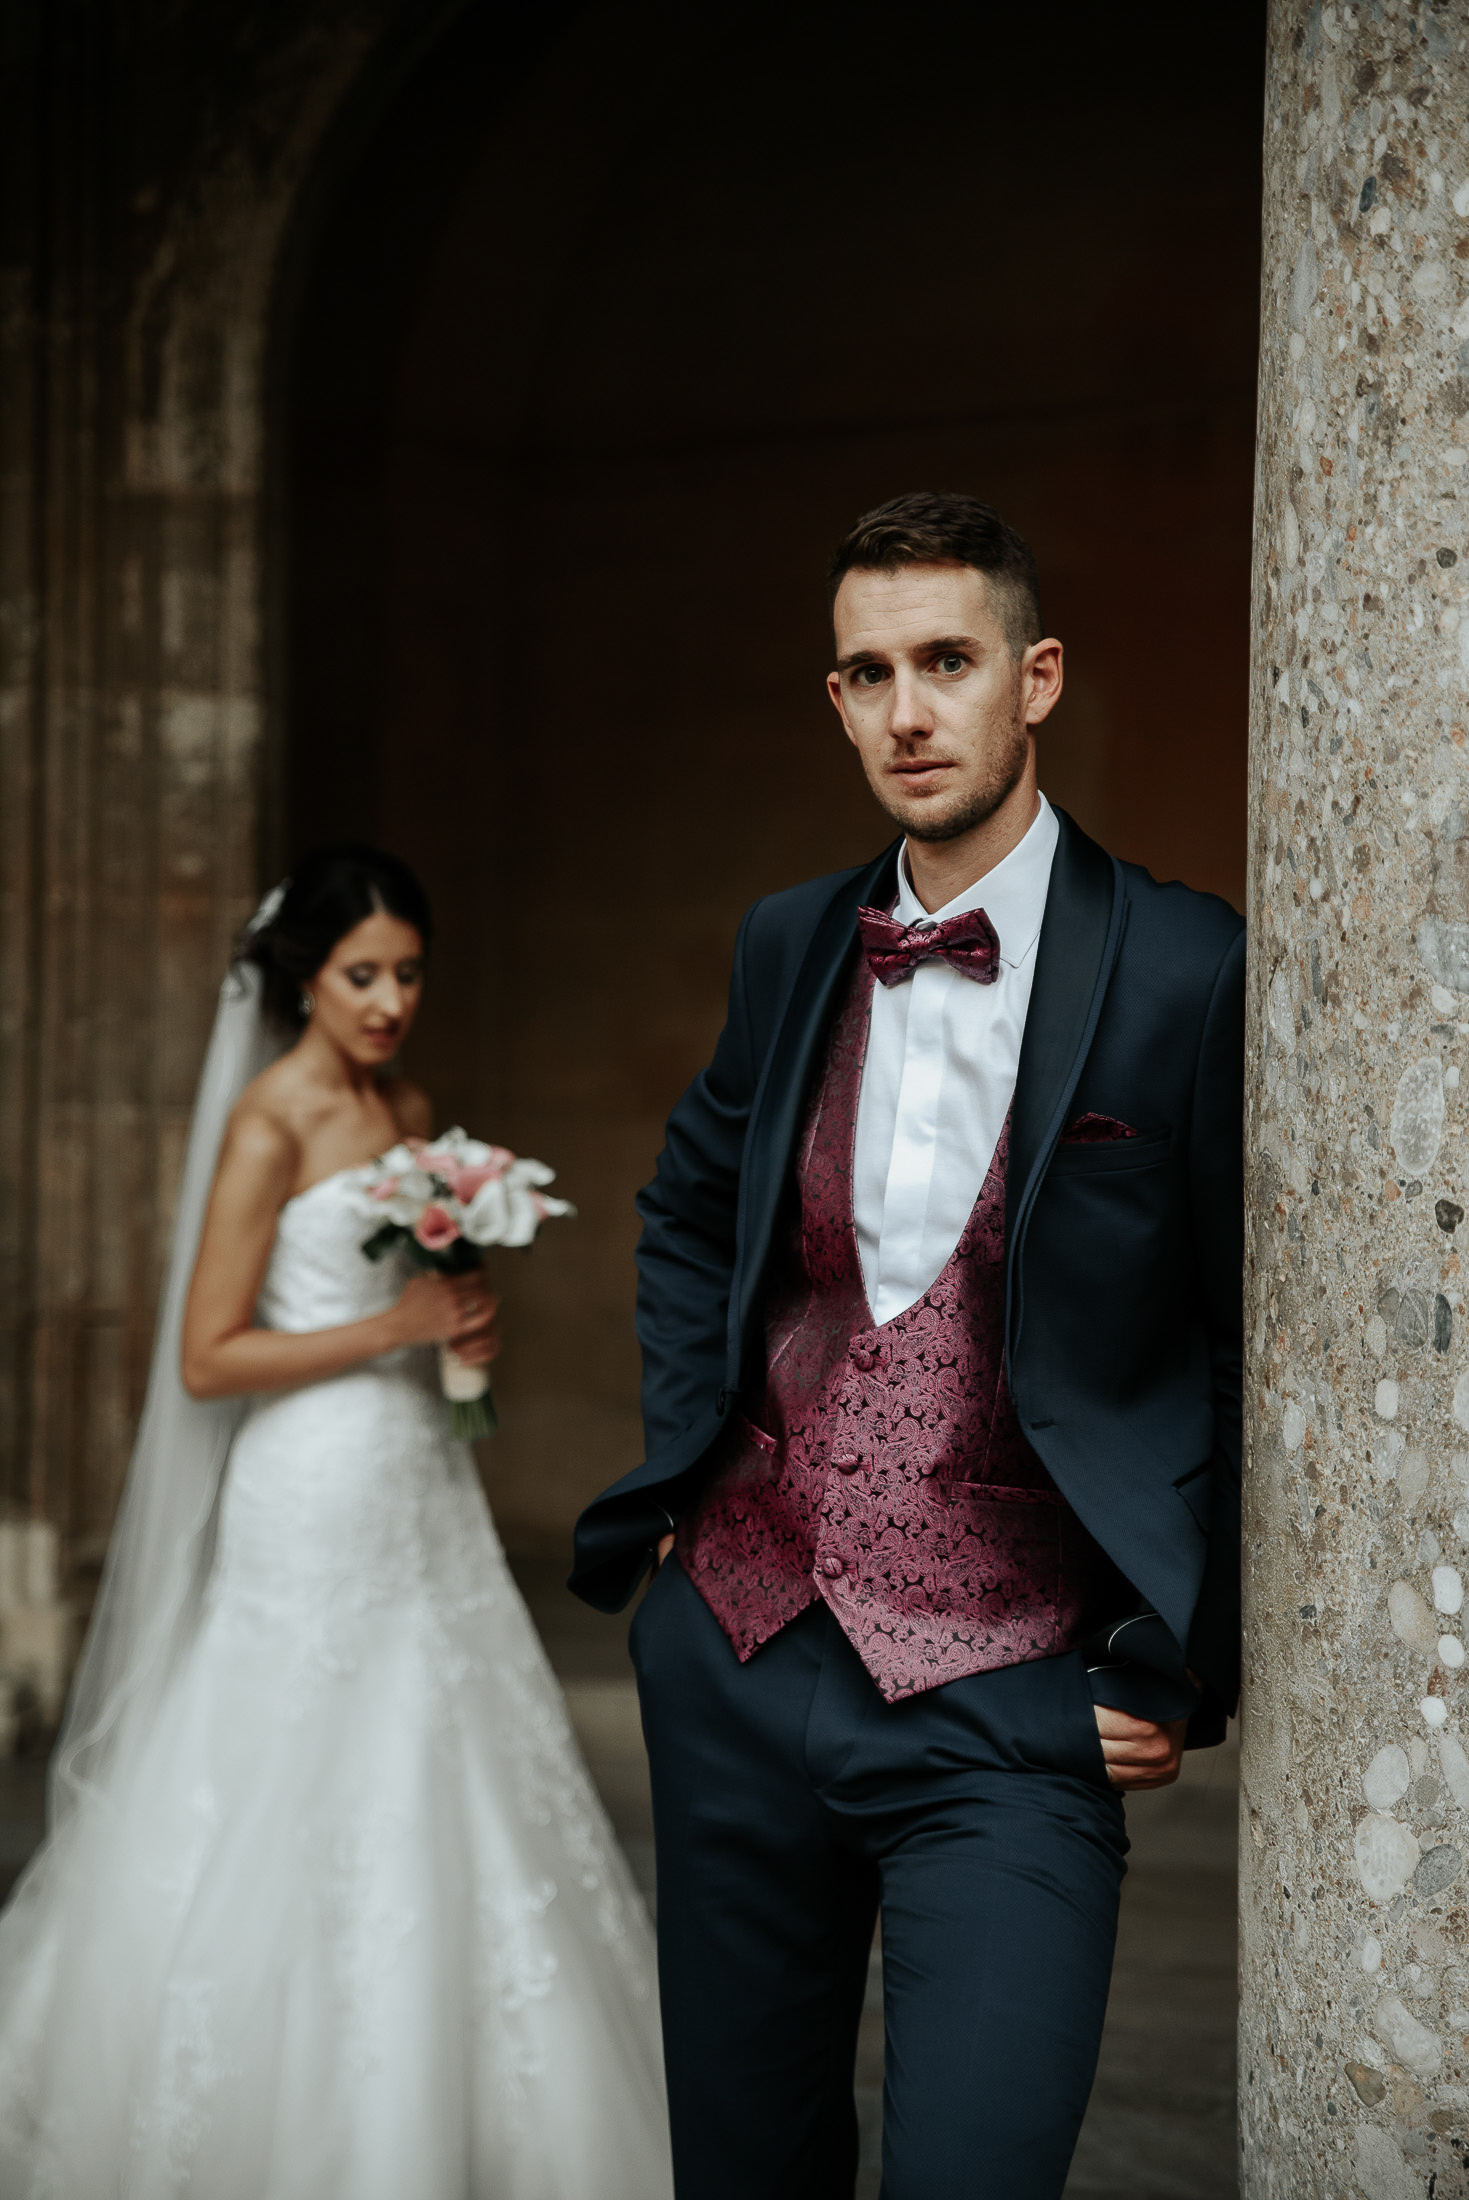 Wedding photo shooting at the Alhambra